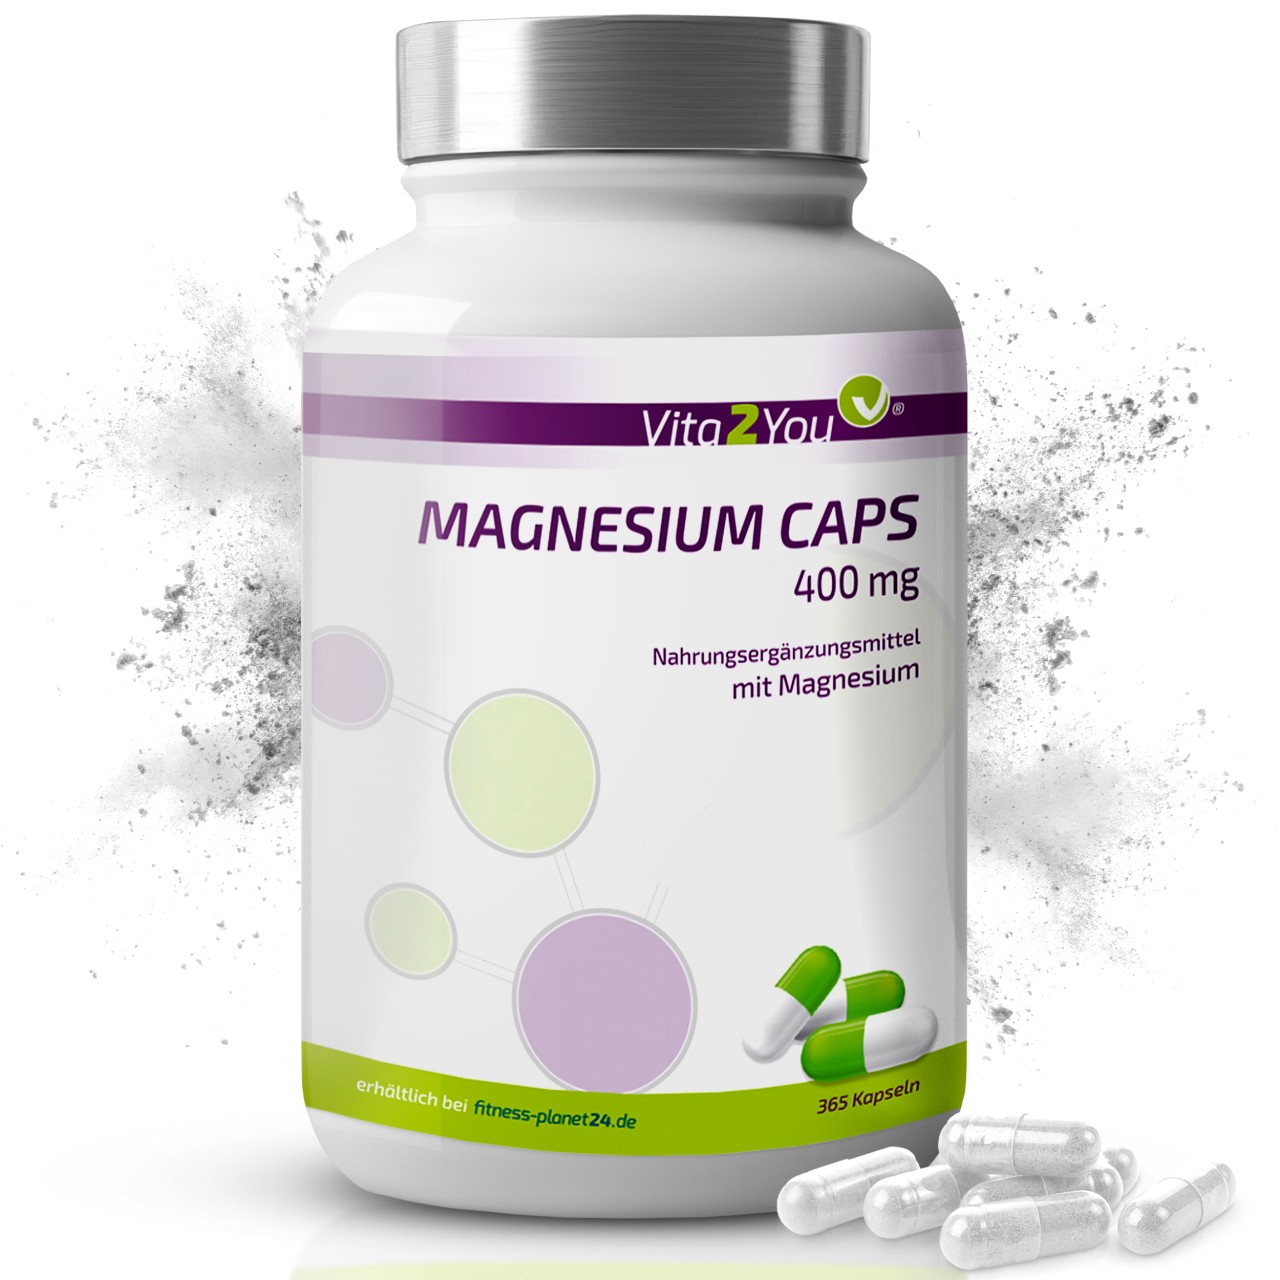 Vita2You Magnesium Caps 365 Kapseln - 400mg reines Magnesium pro Kapsel von vita2you